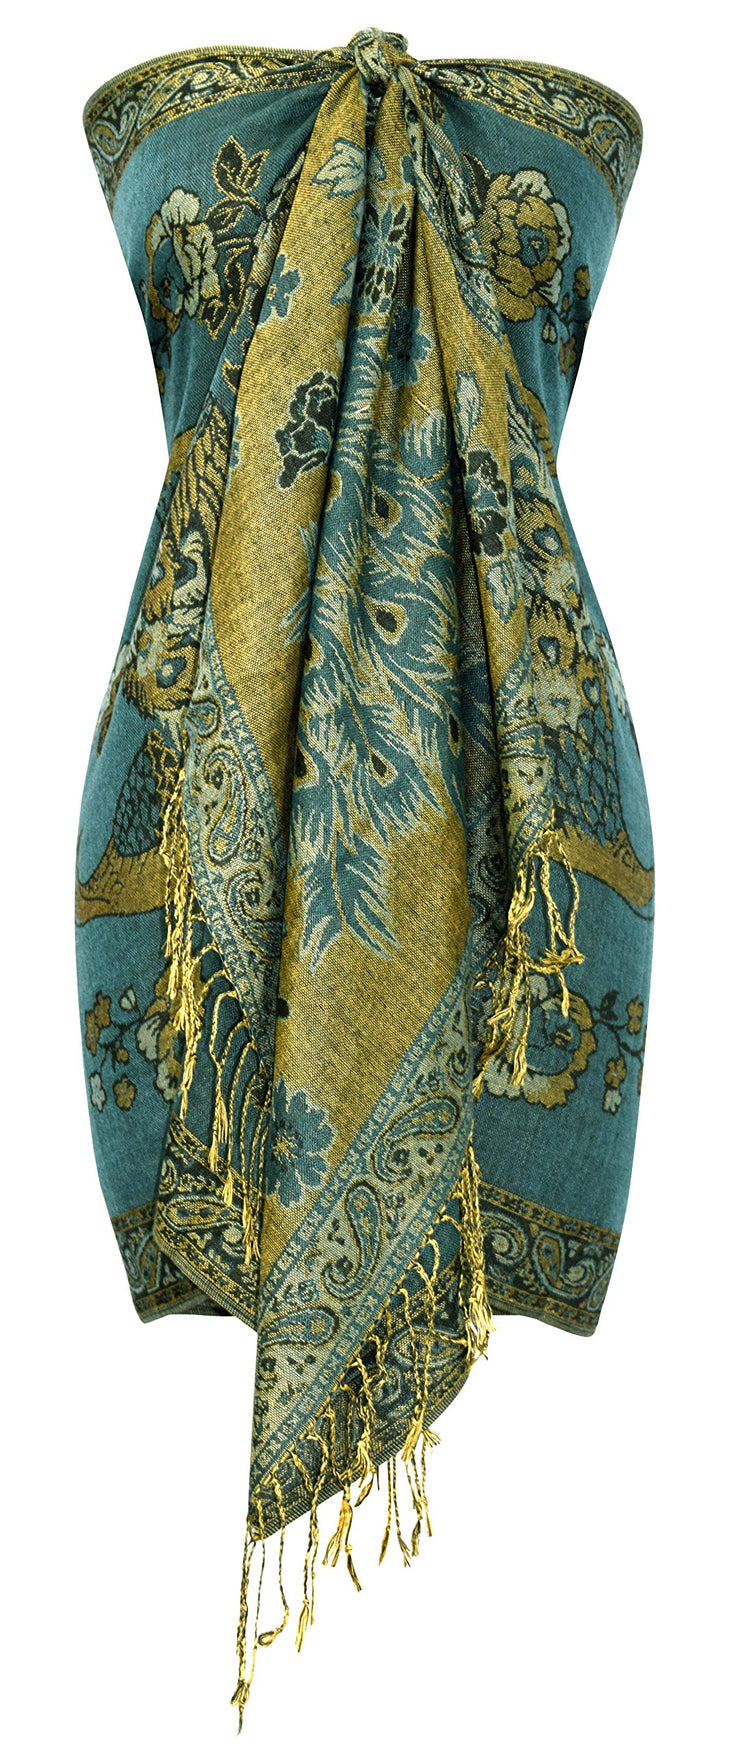 Floral Peacock Reversible Shimmer Layered Pashmina Wrap Shawl Scarf